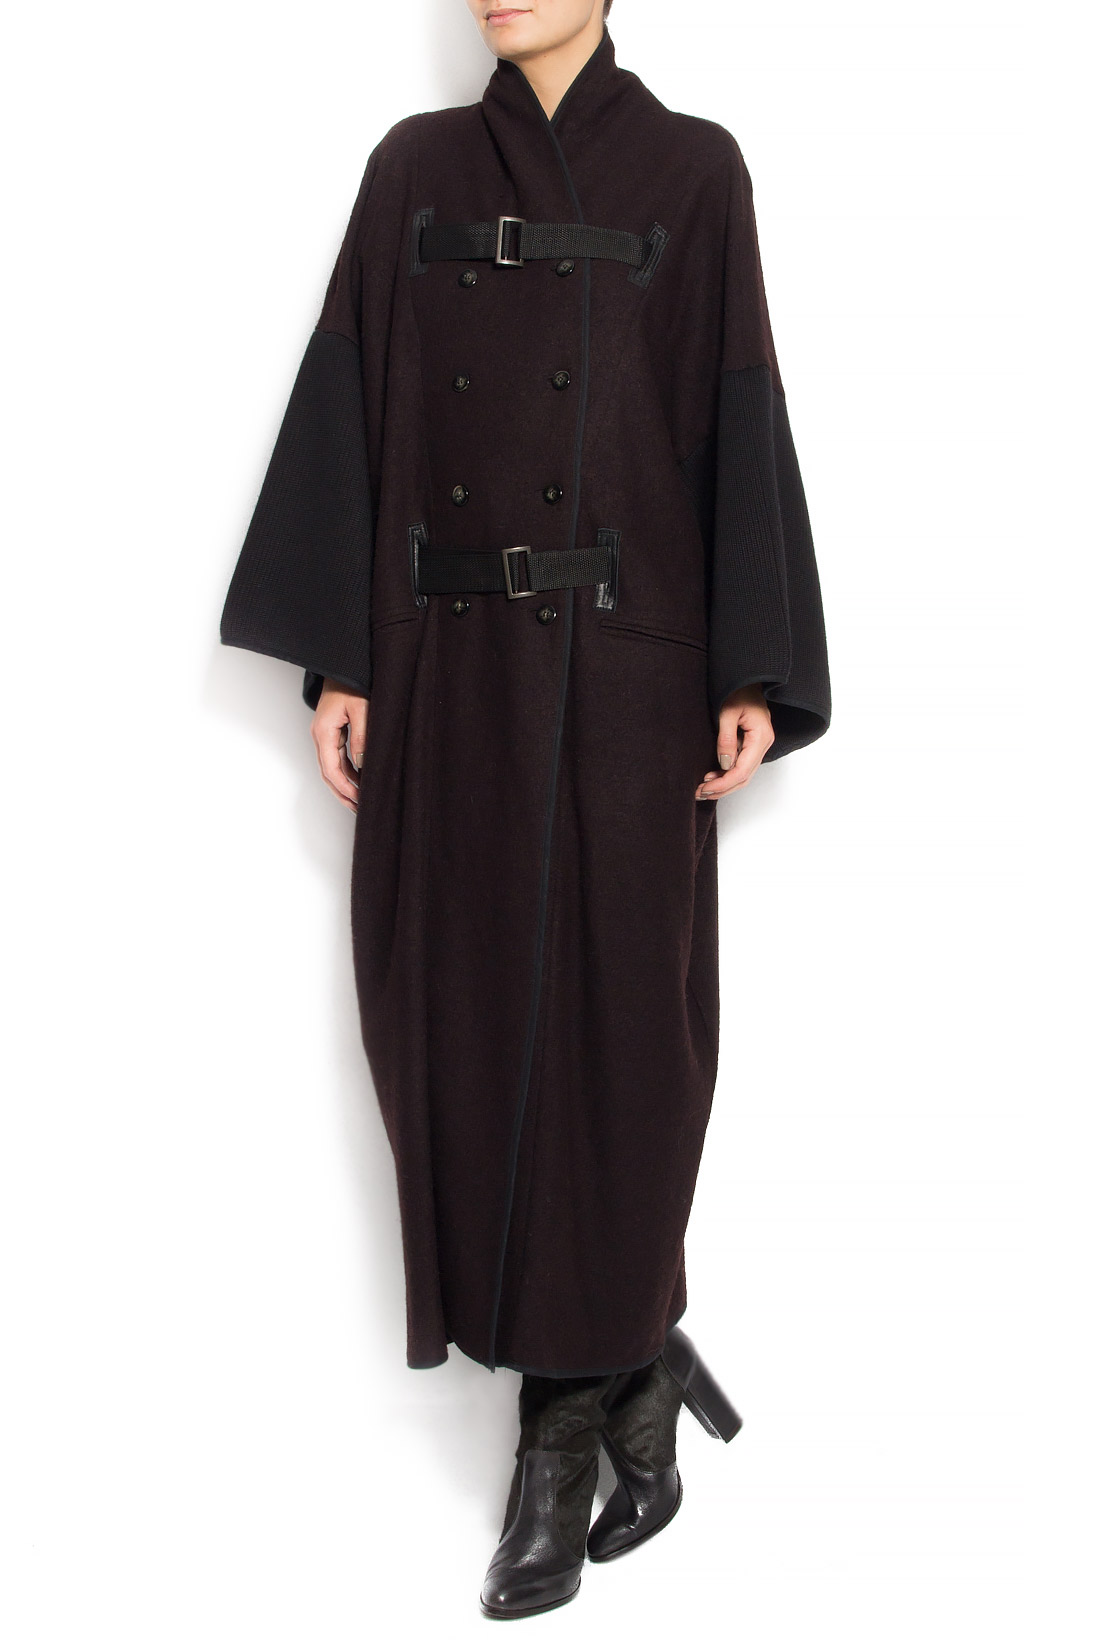 Palton din lana ''Relaxed Coat'' Studio Cabal imagine 0